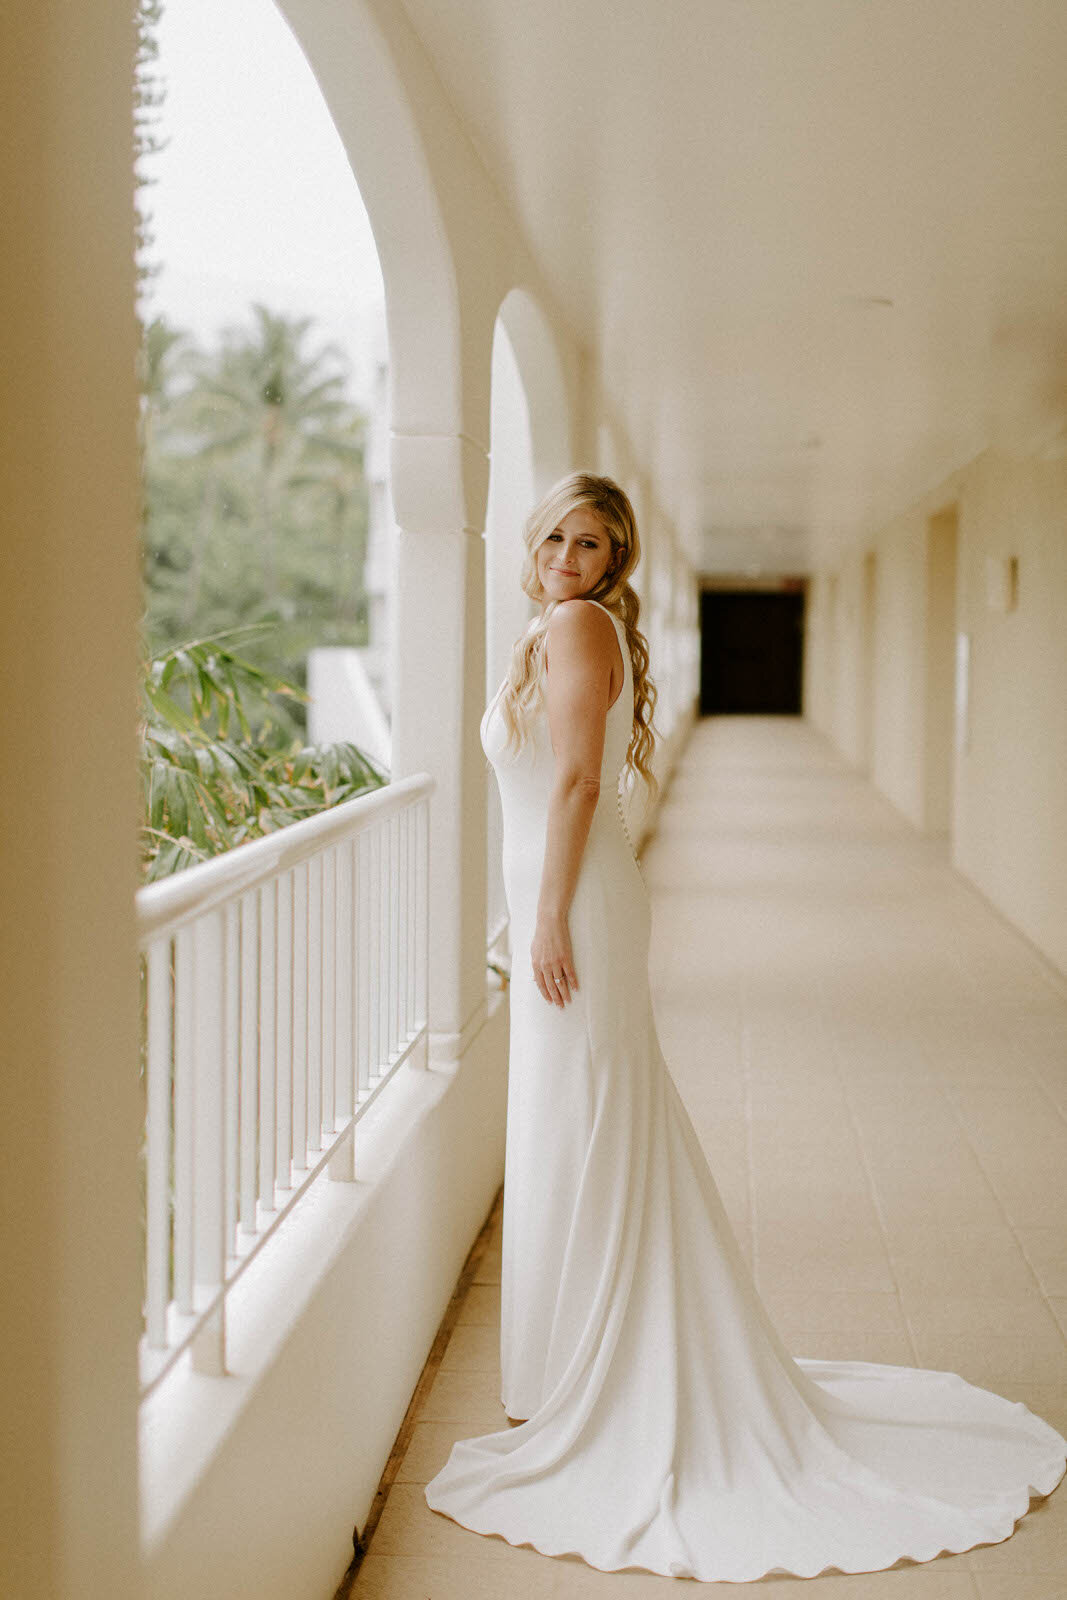 Brianna-Broyles-Photography-Fairmont-Kea-Lani-Wedding-Maui-Photographer-19.jpg